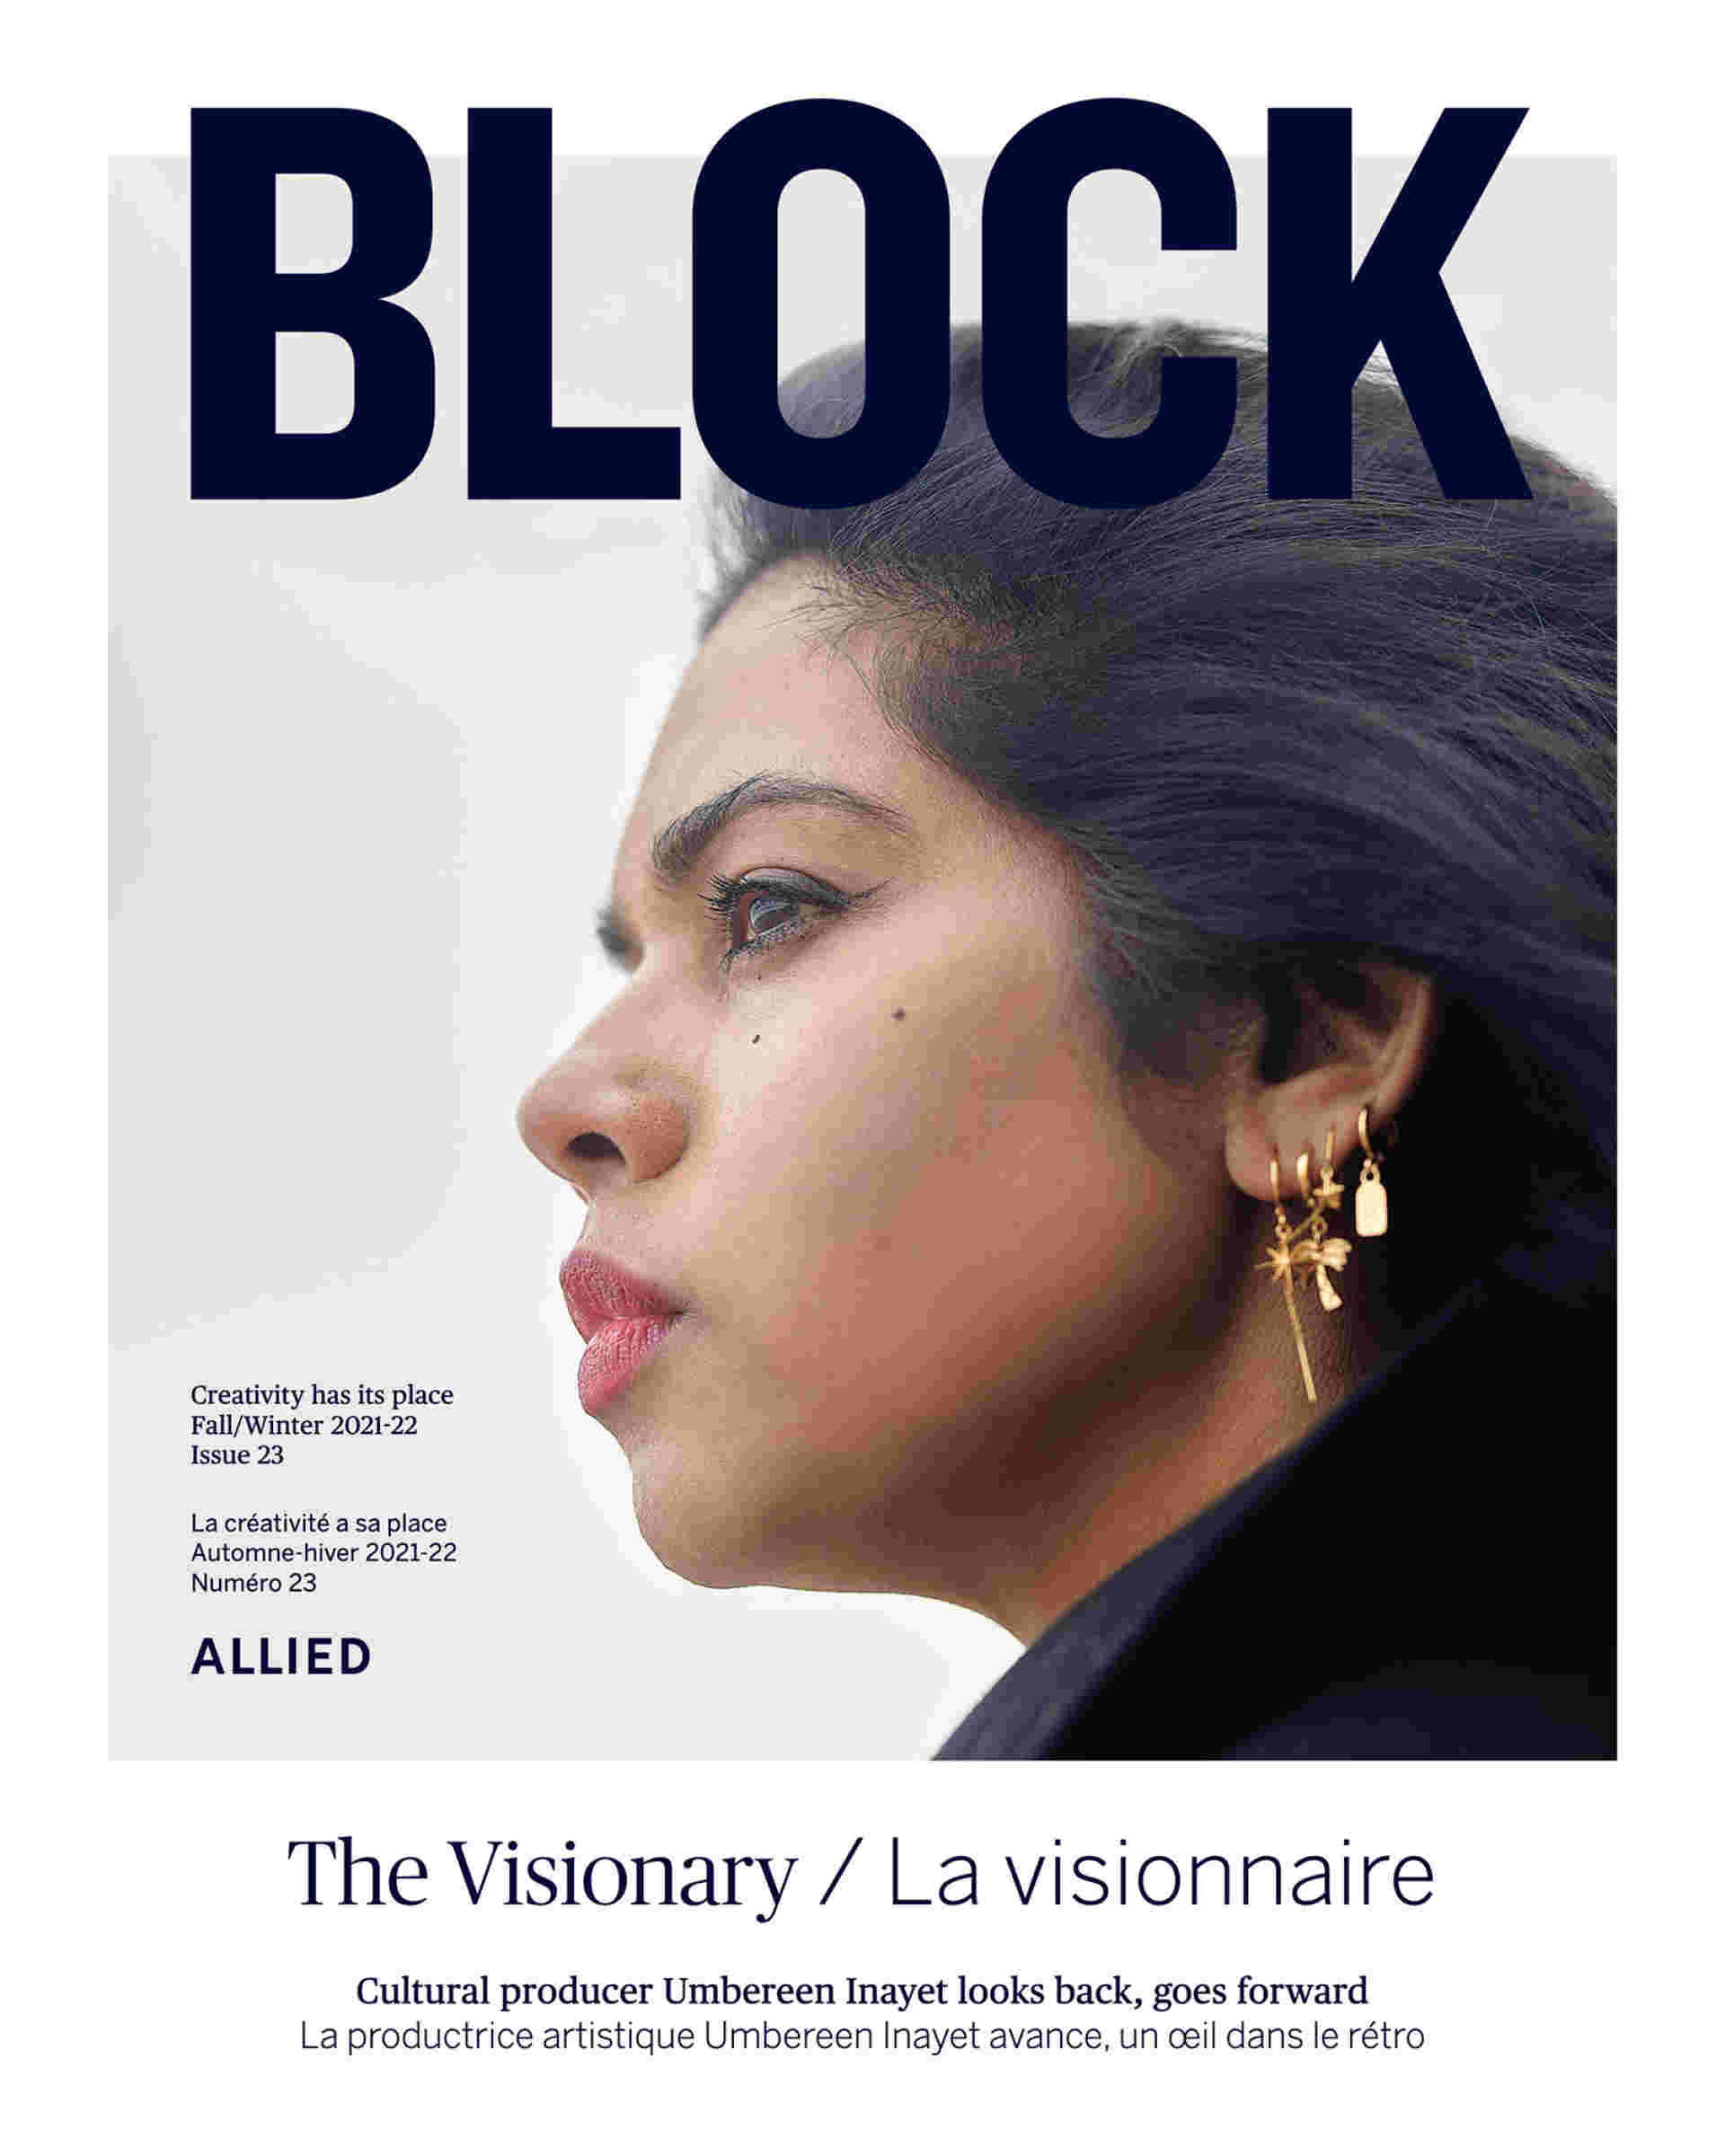 Automne/Hiver 2022 (Numéro 25) - block-magazine-the-visionary